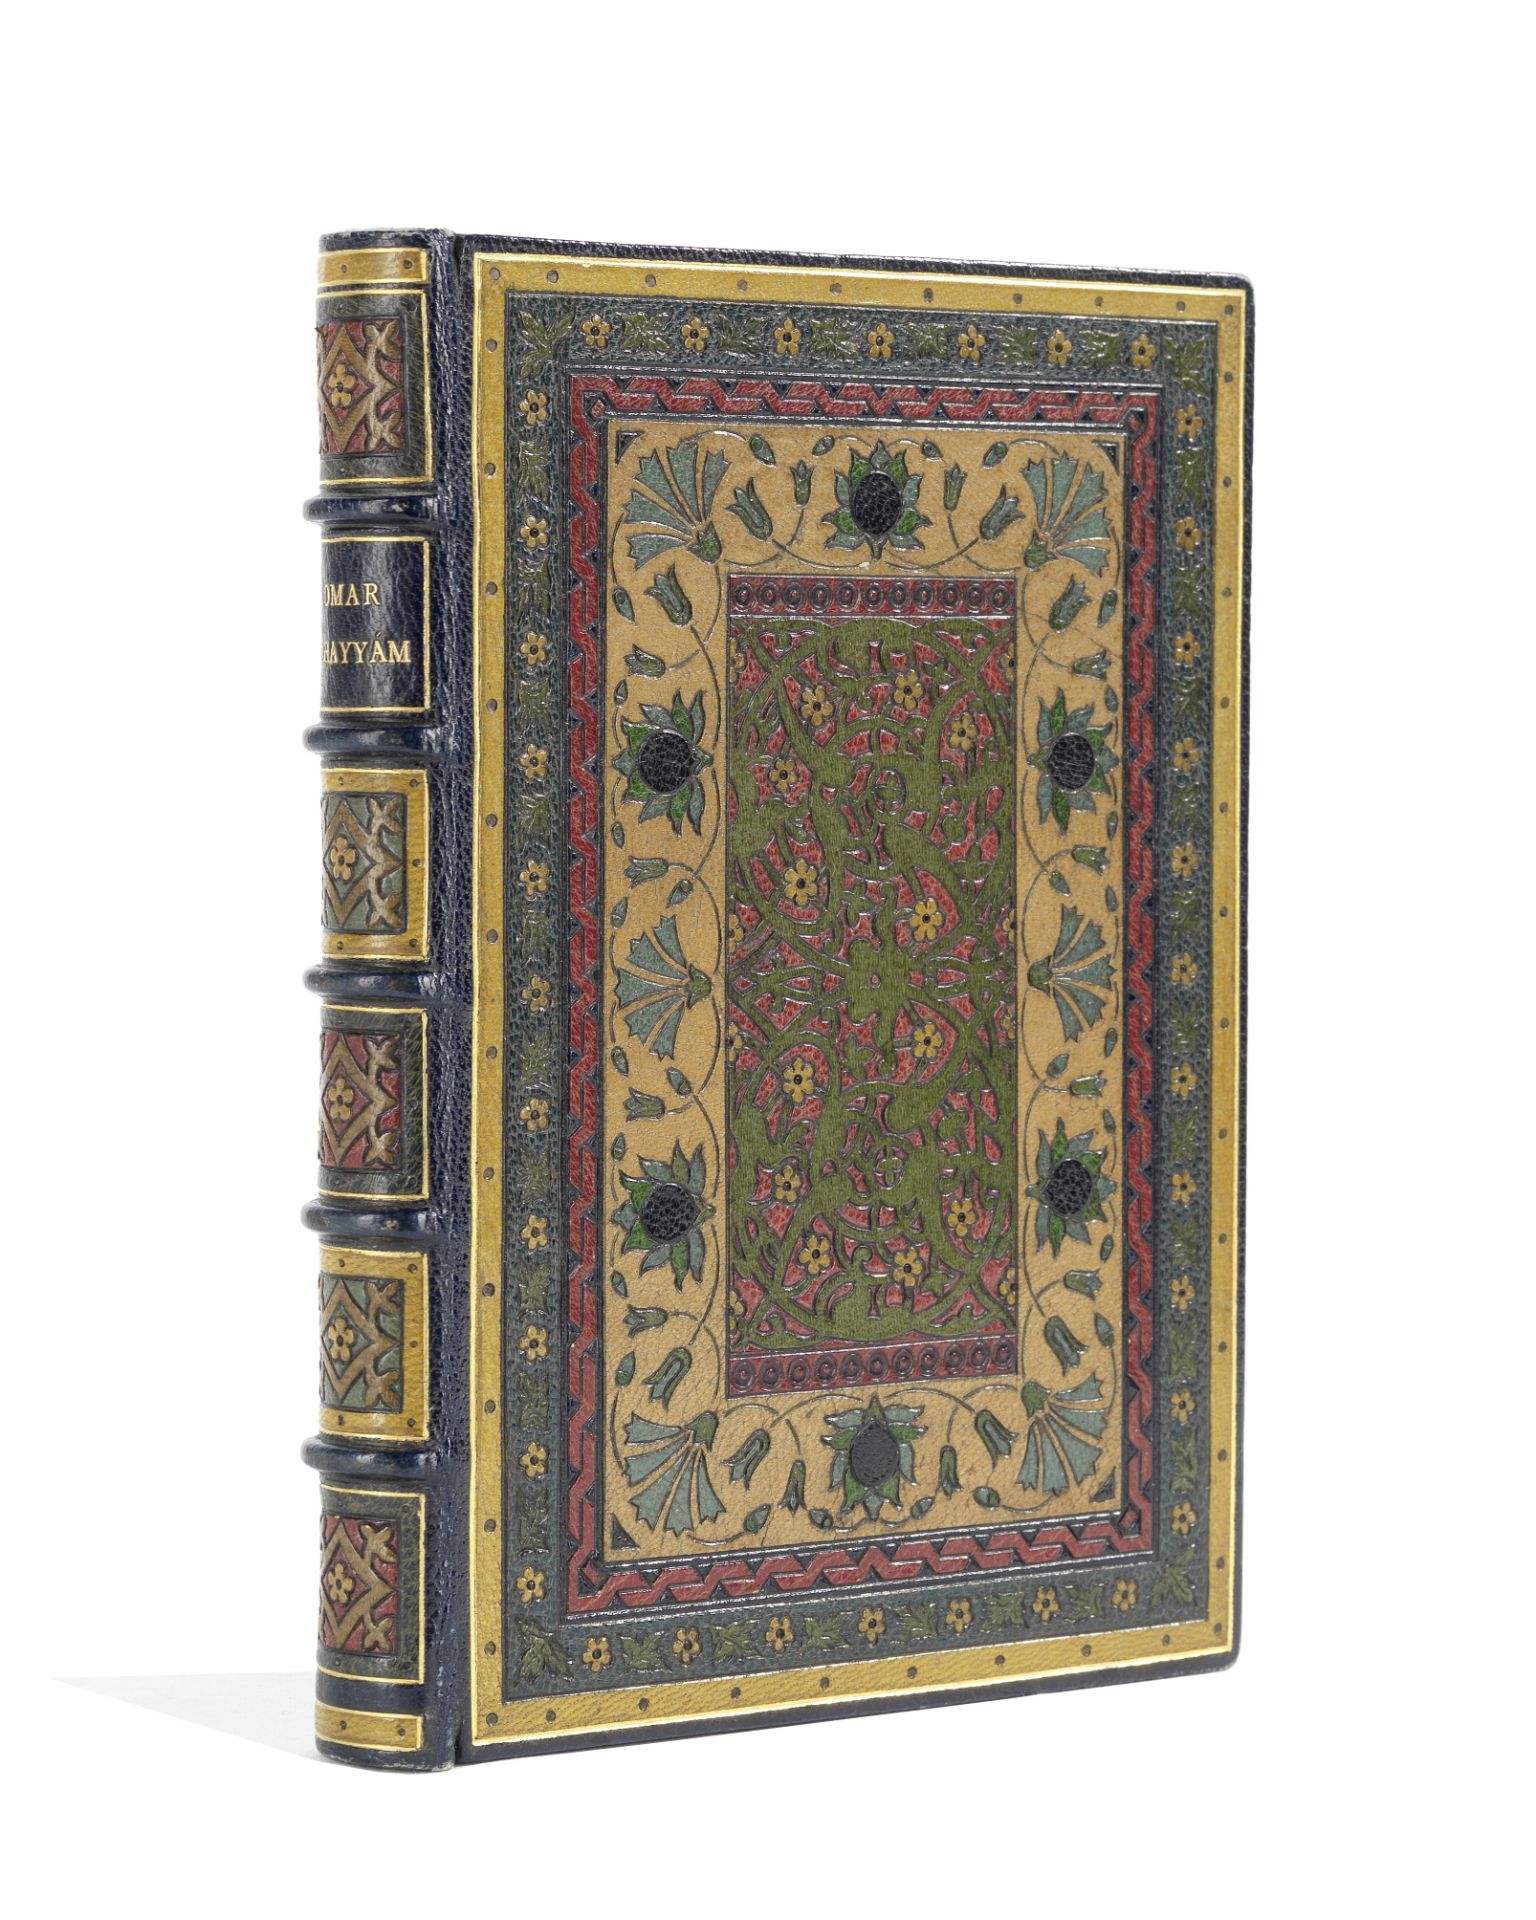 BINDING Rubaiyat of Omar Khayyam, George G. Harrap, [c.1910]